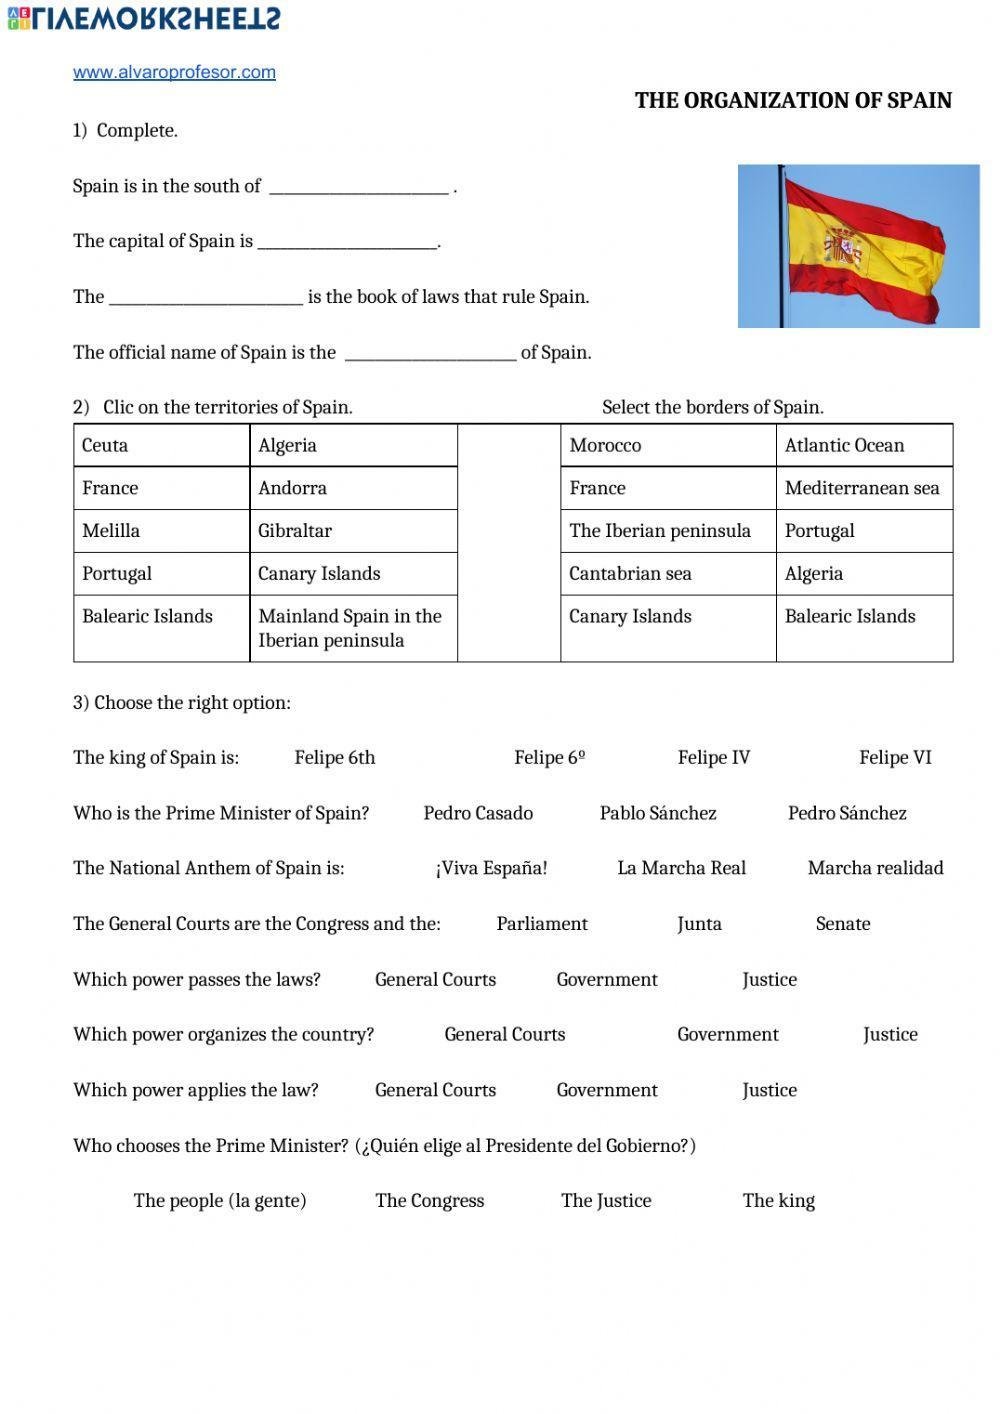 Organization of Spain